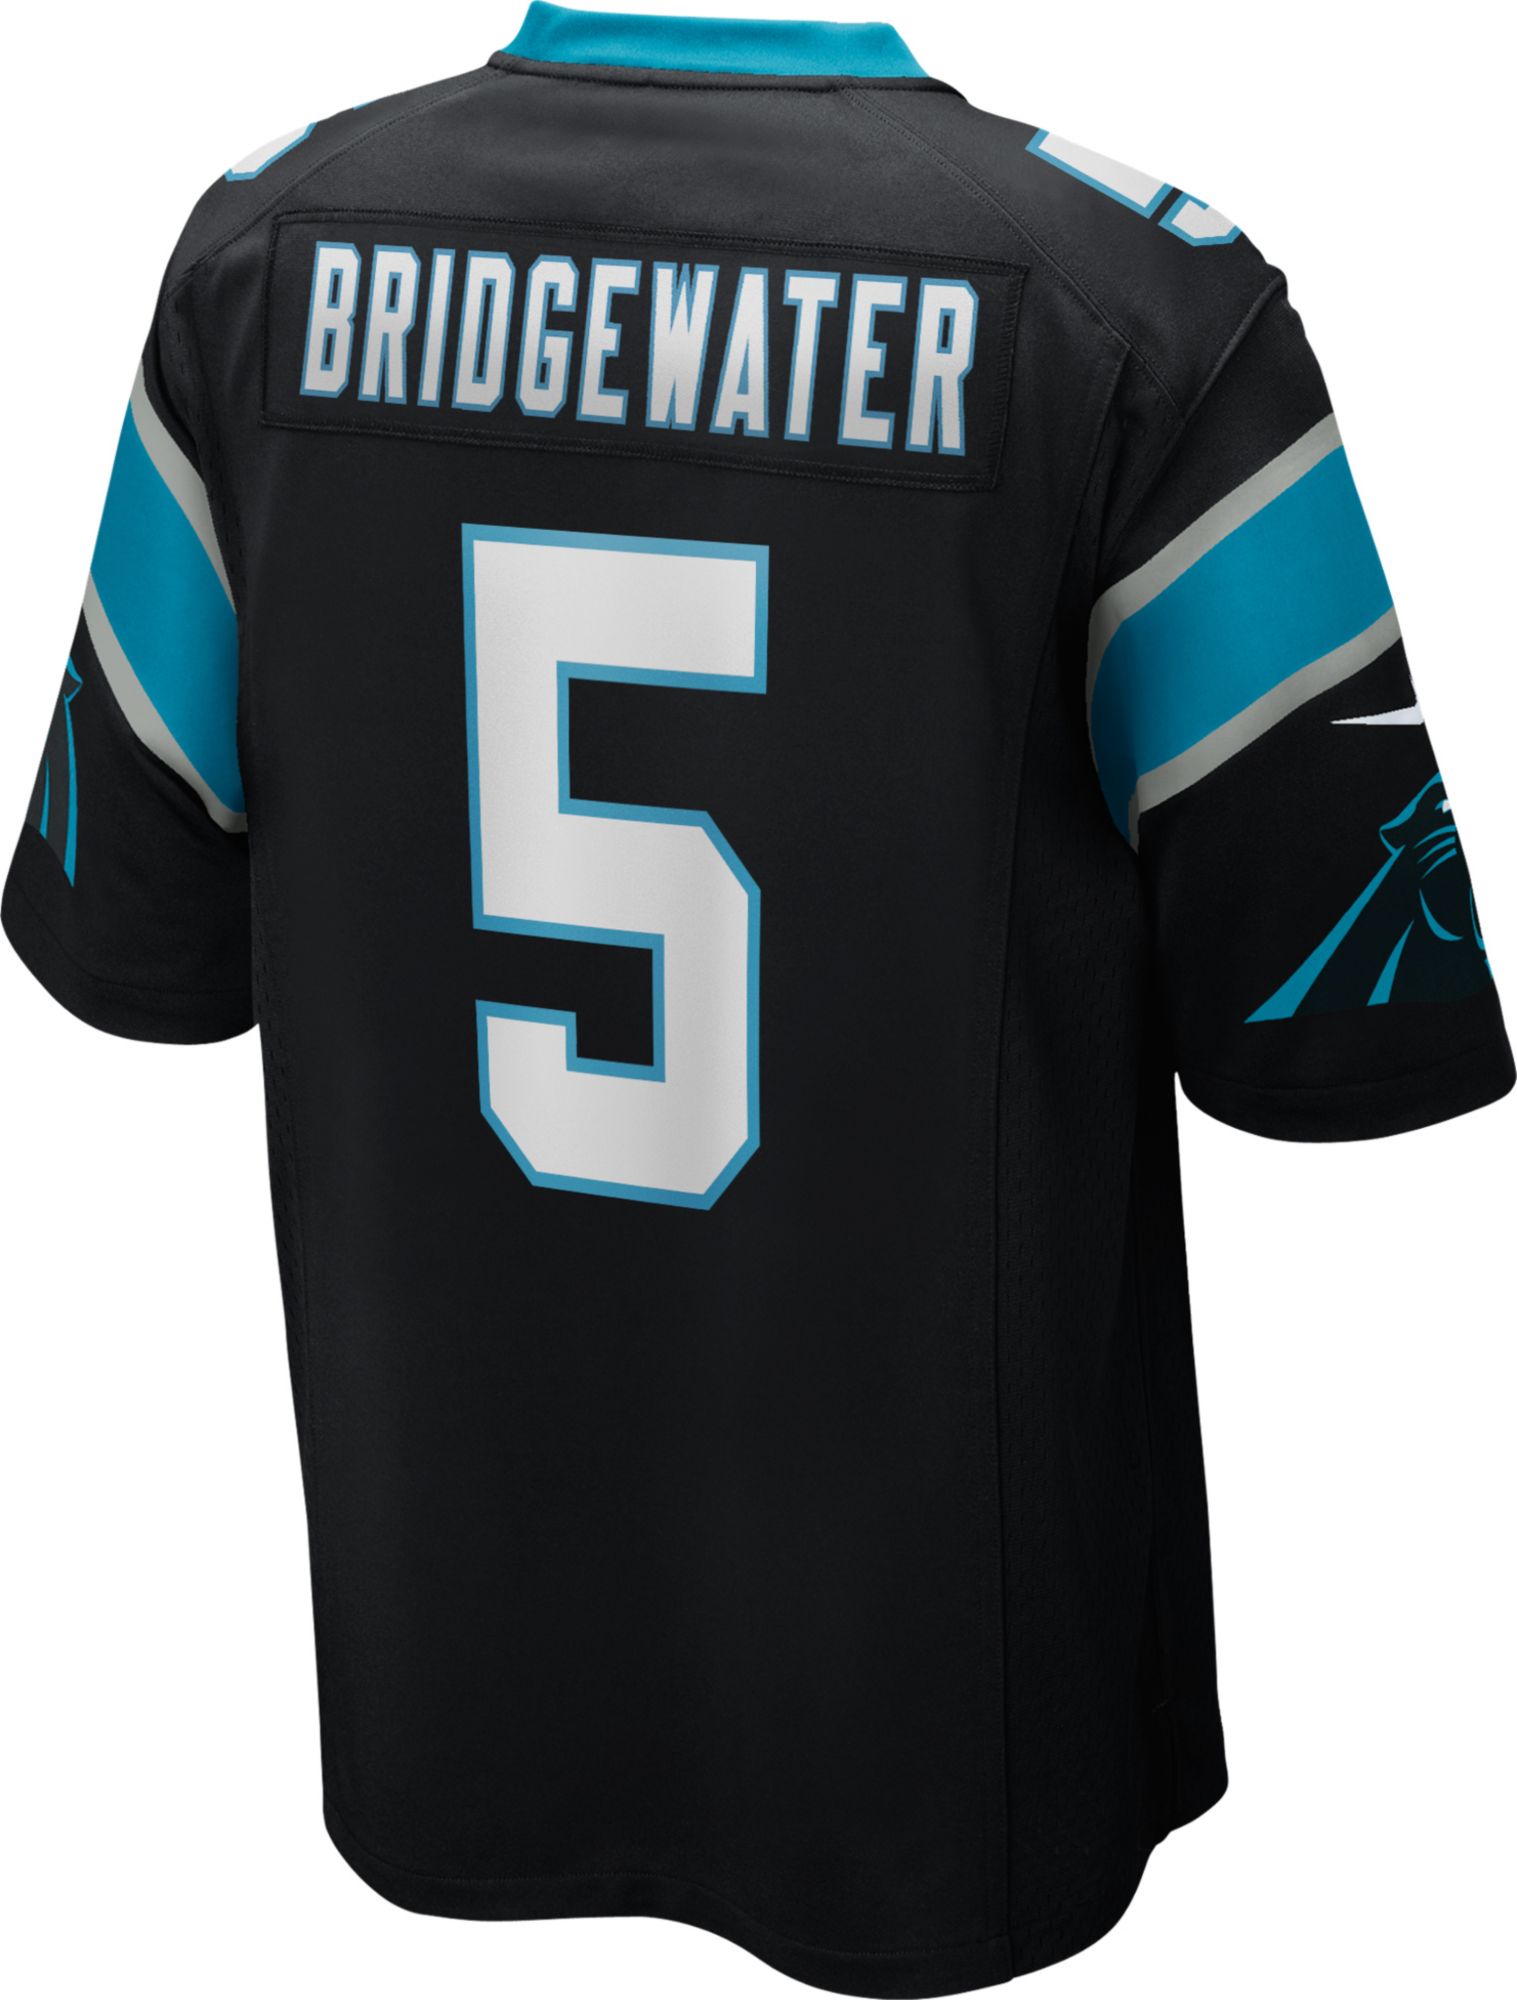 panthers bridgewater jersey